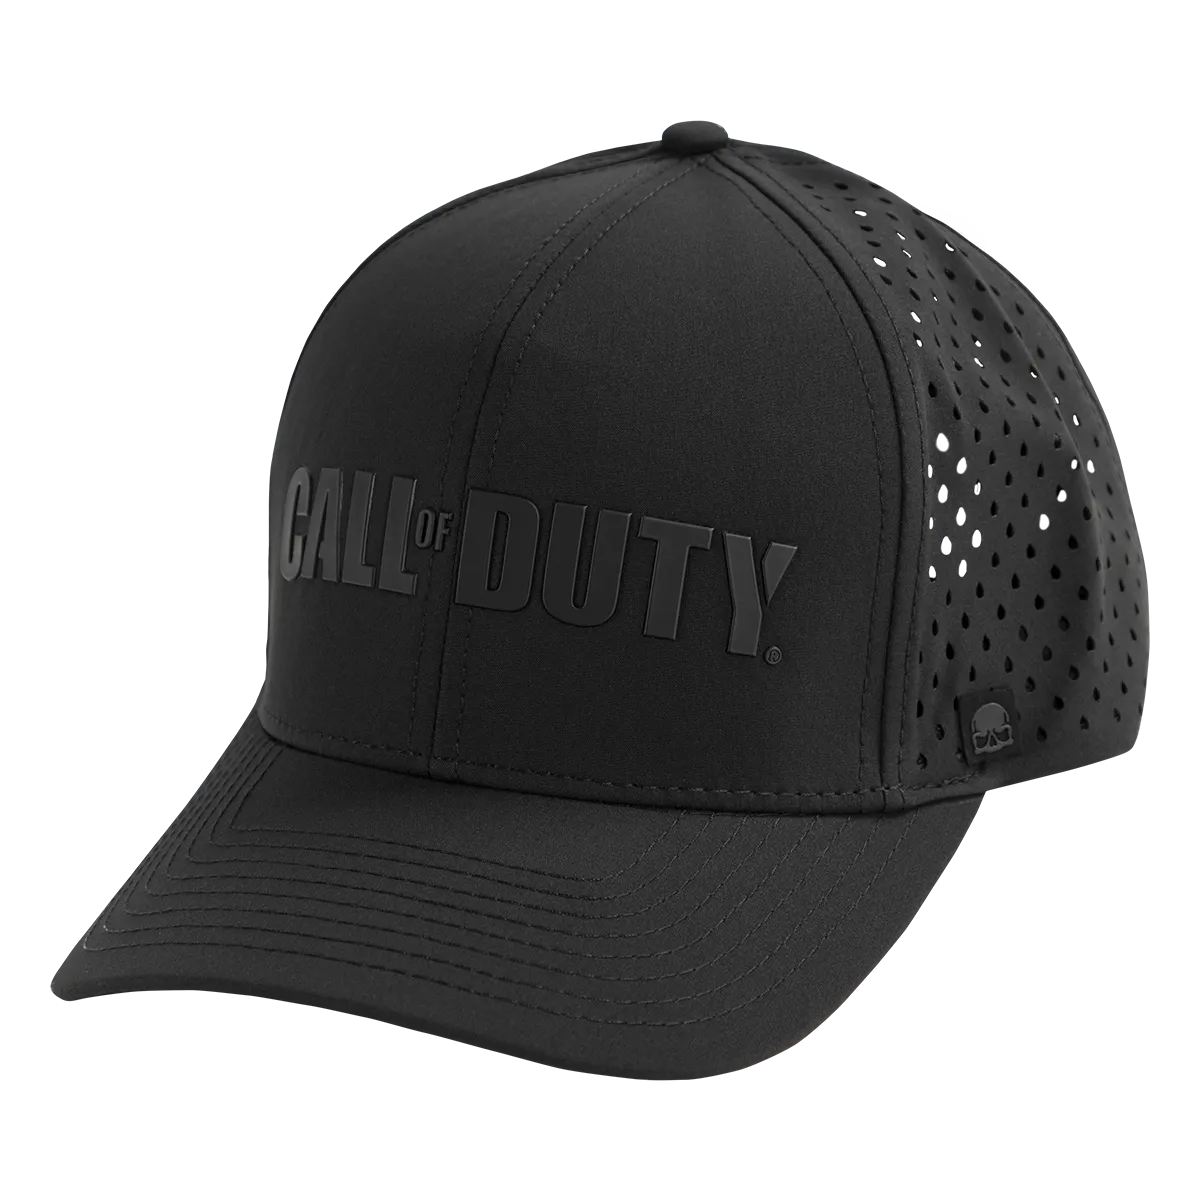 Call of Duty Baseball Cap "Stealth" Black Image 3